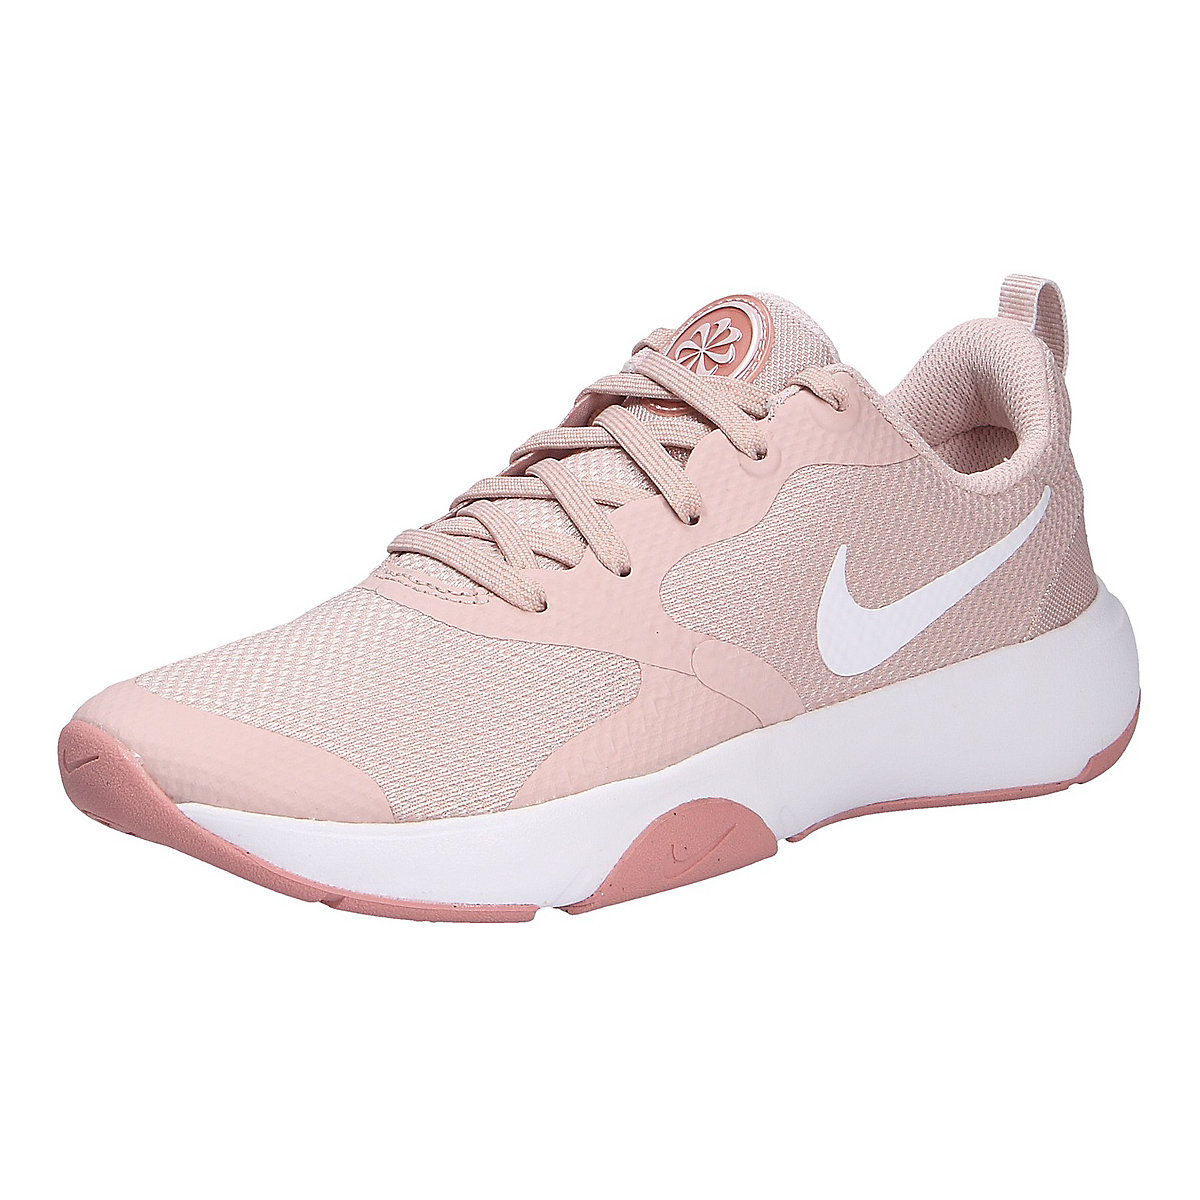 NIKE Low Sneakers für Mädchen rosa